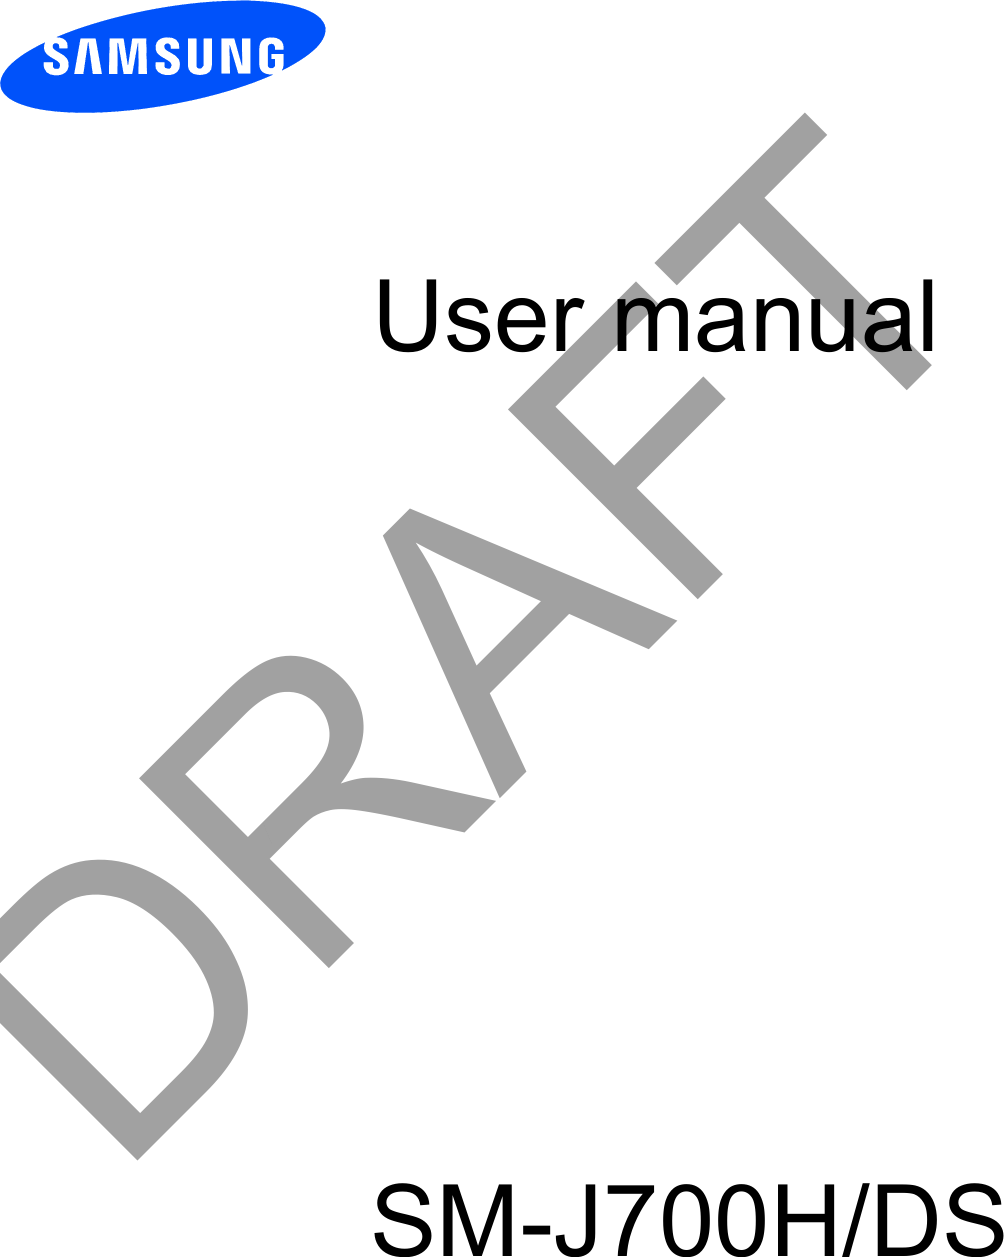 User manualSM-J700H/DSDRAFT